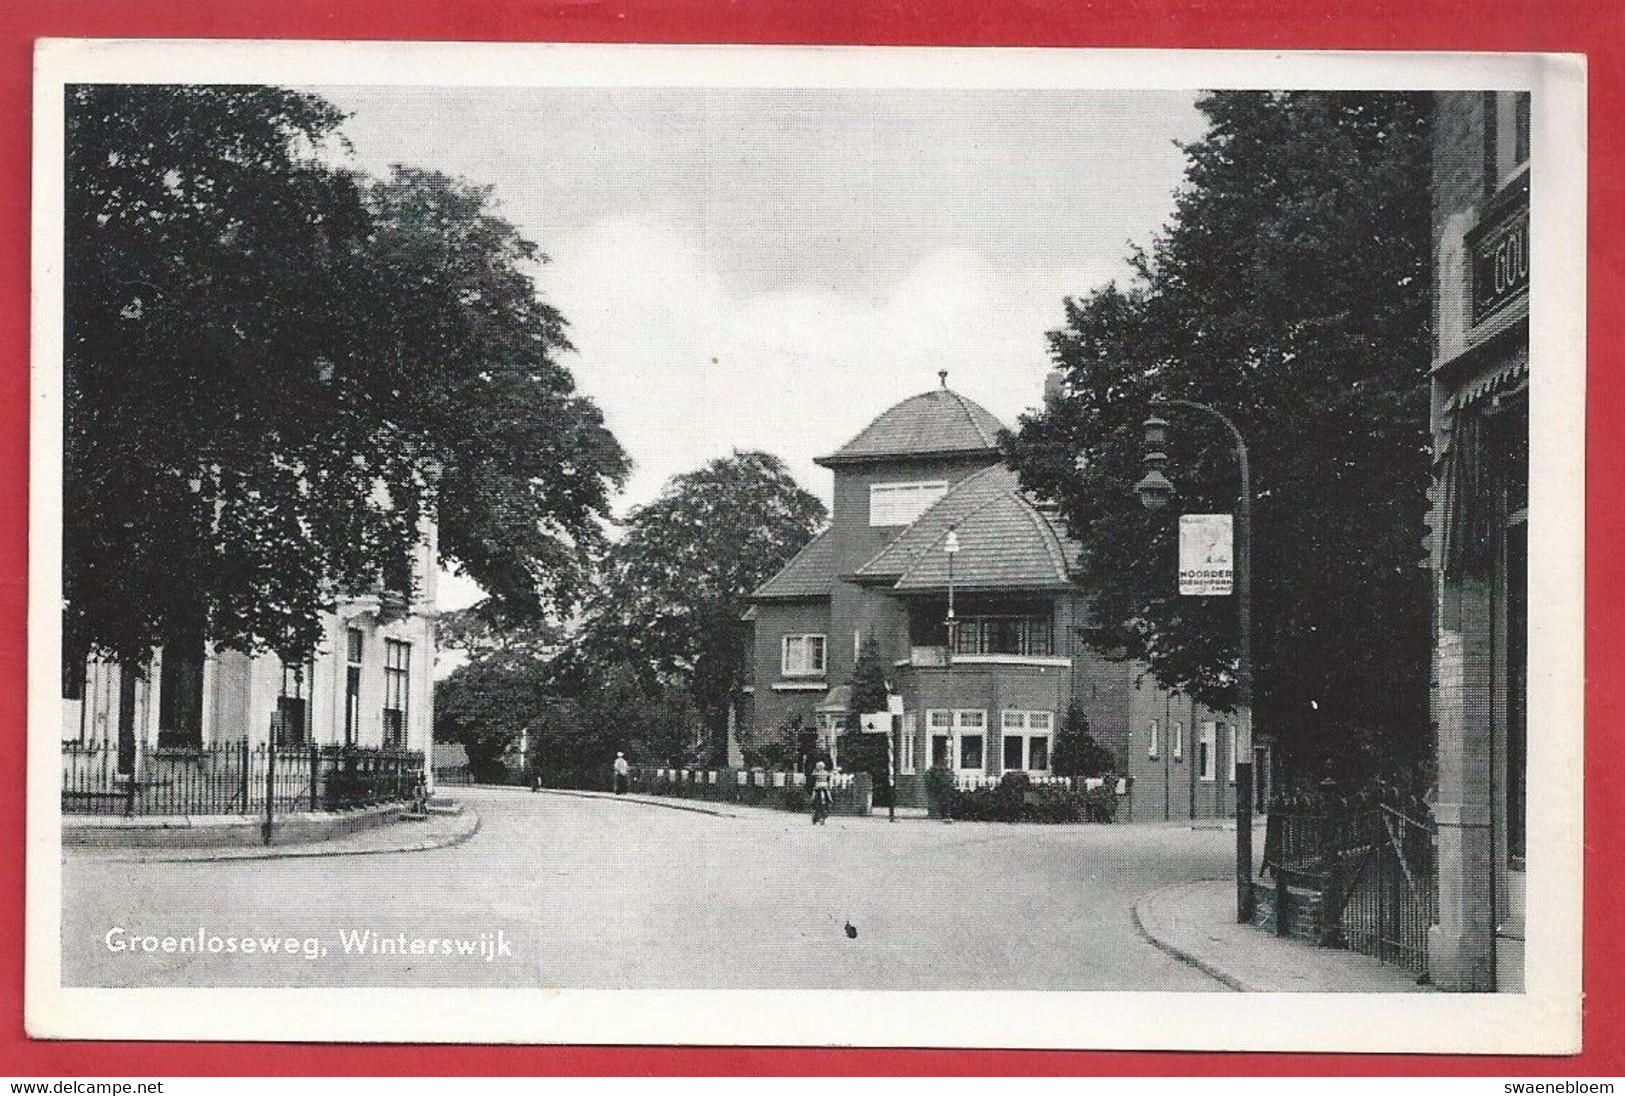 NL.- Winterswijk, Groenloseweg. Uitgave J. Bus. 1956. - Winterswijk